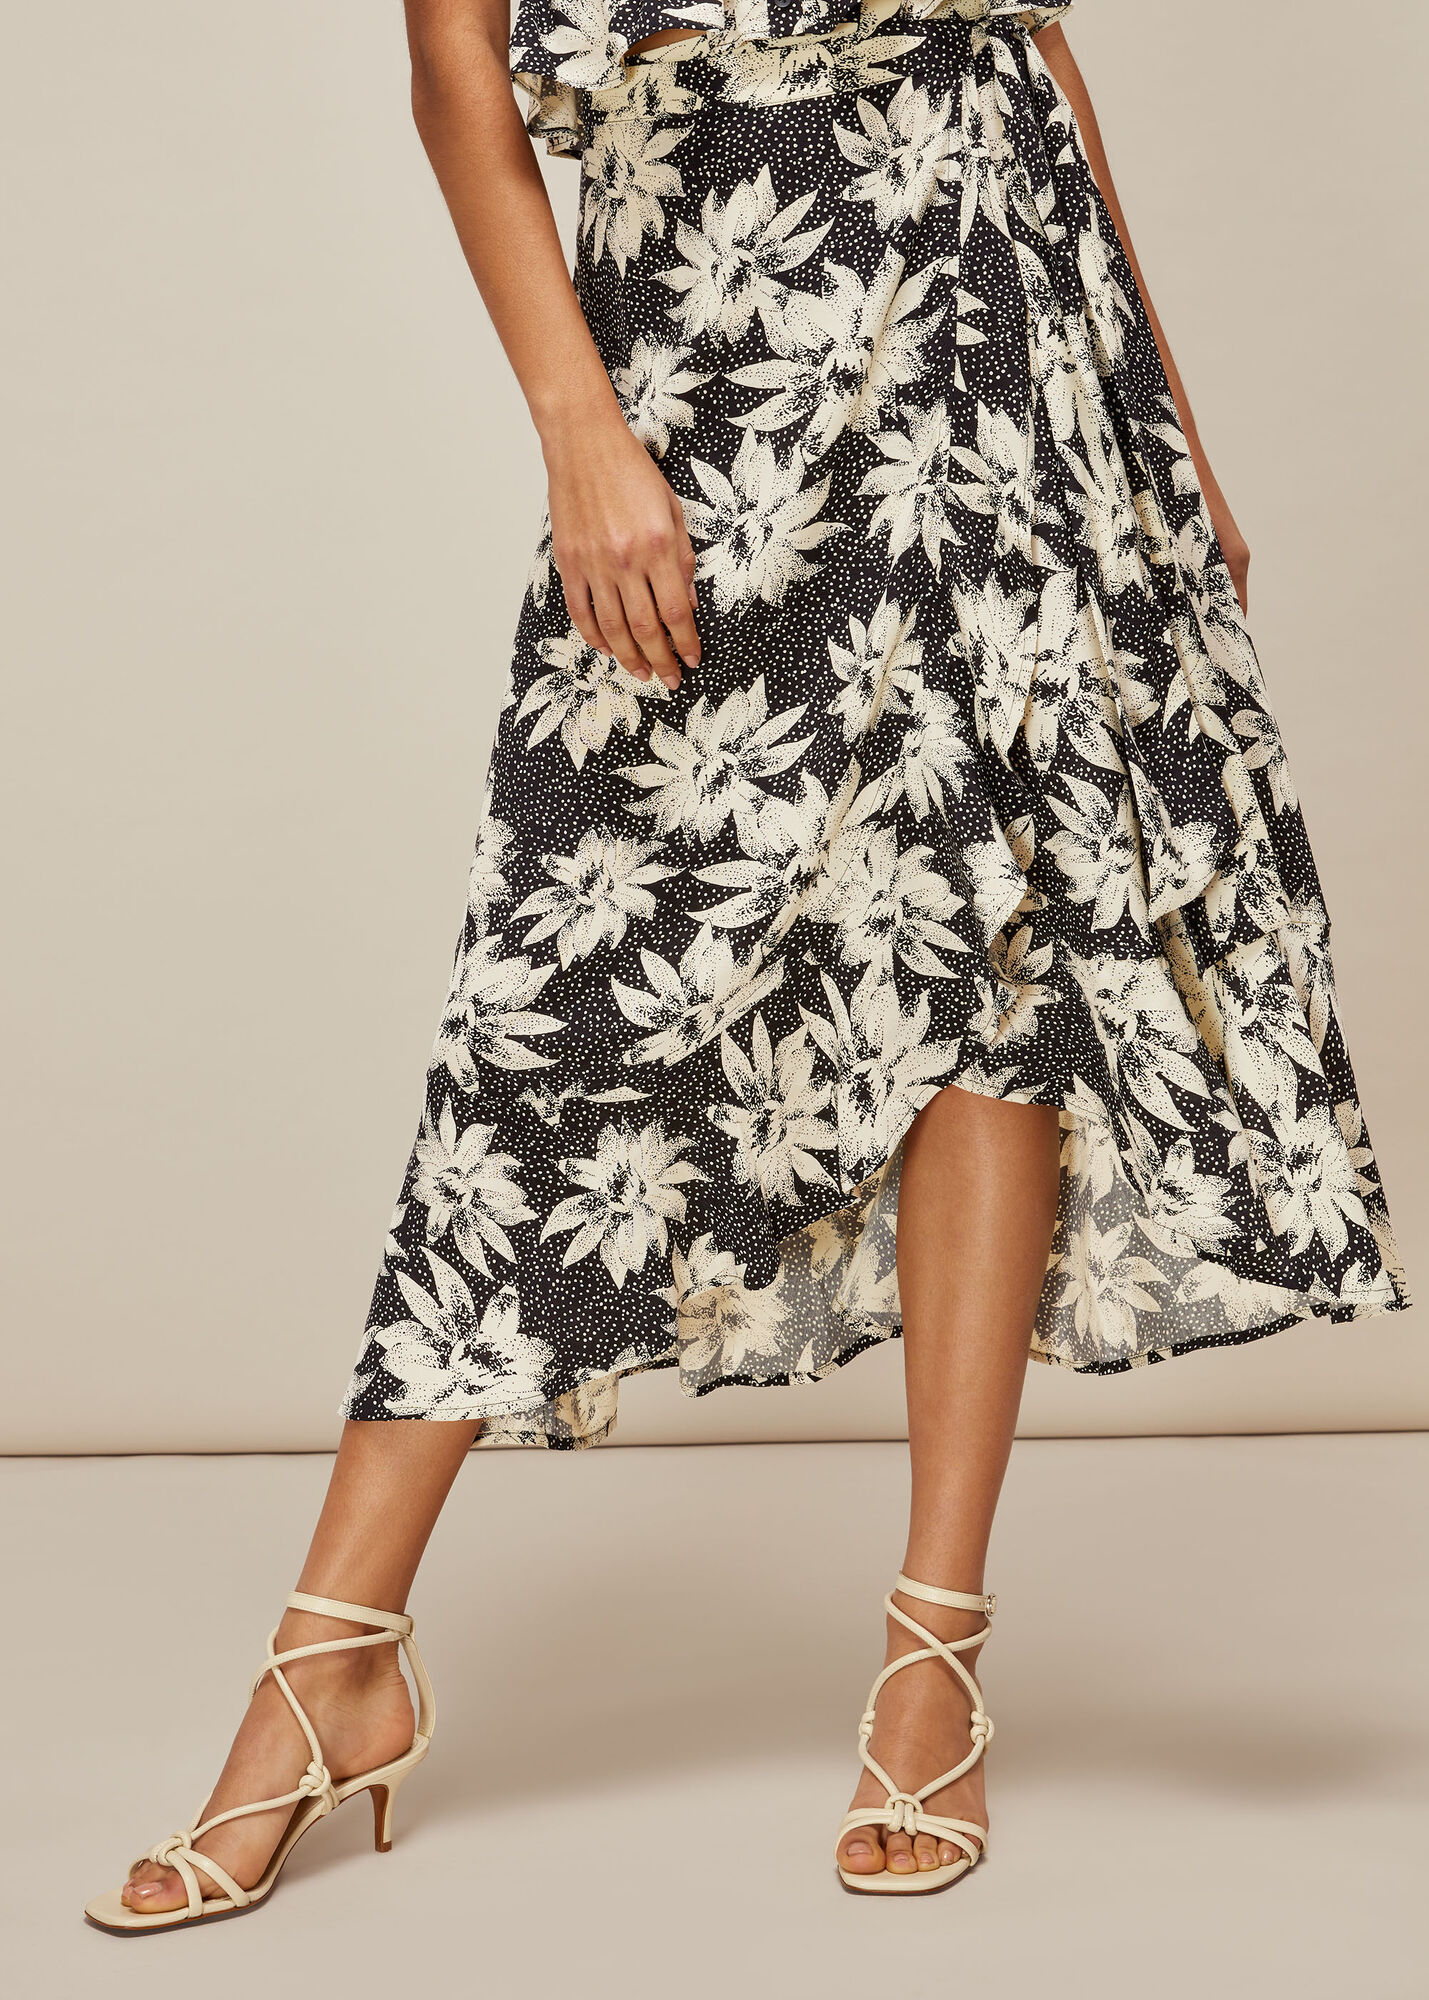 Black/Multi Starburst Floral Print Dress | WHISTLES